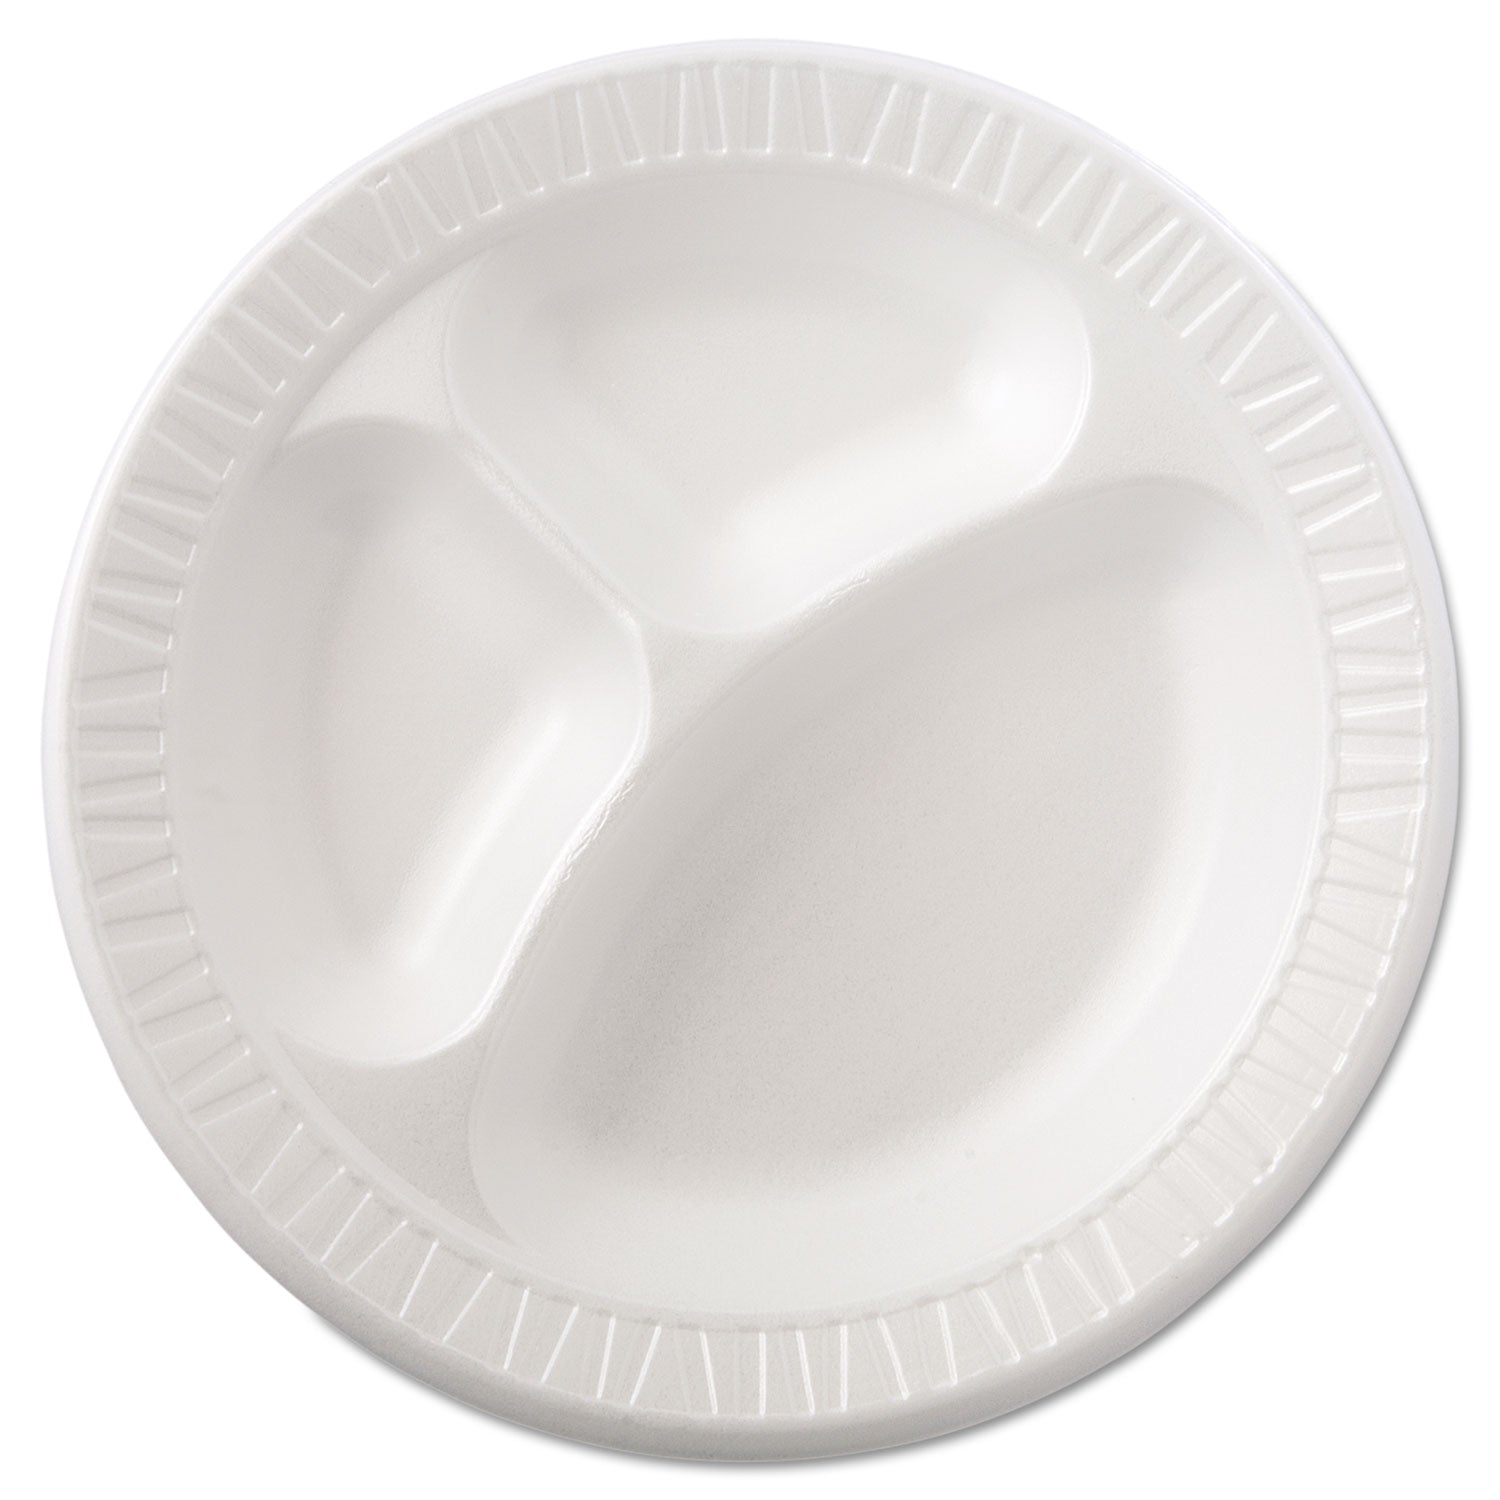 Quiet Class Laminated Foam Dinnerware, Plates, 3-Compartment, 10.25" dia, White, 125/Pack, 4 Packs/Carton - 